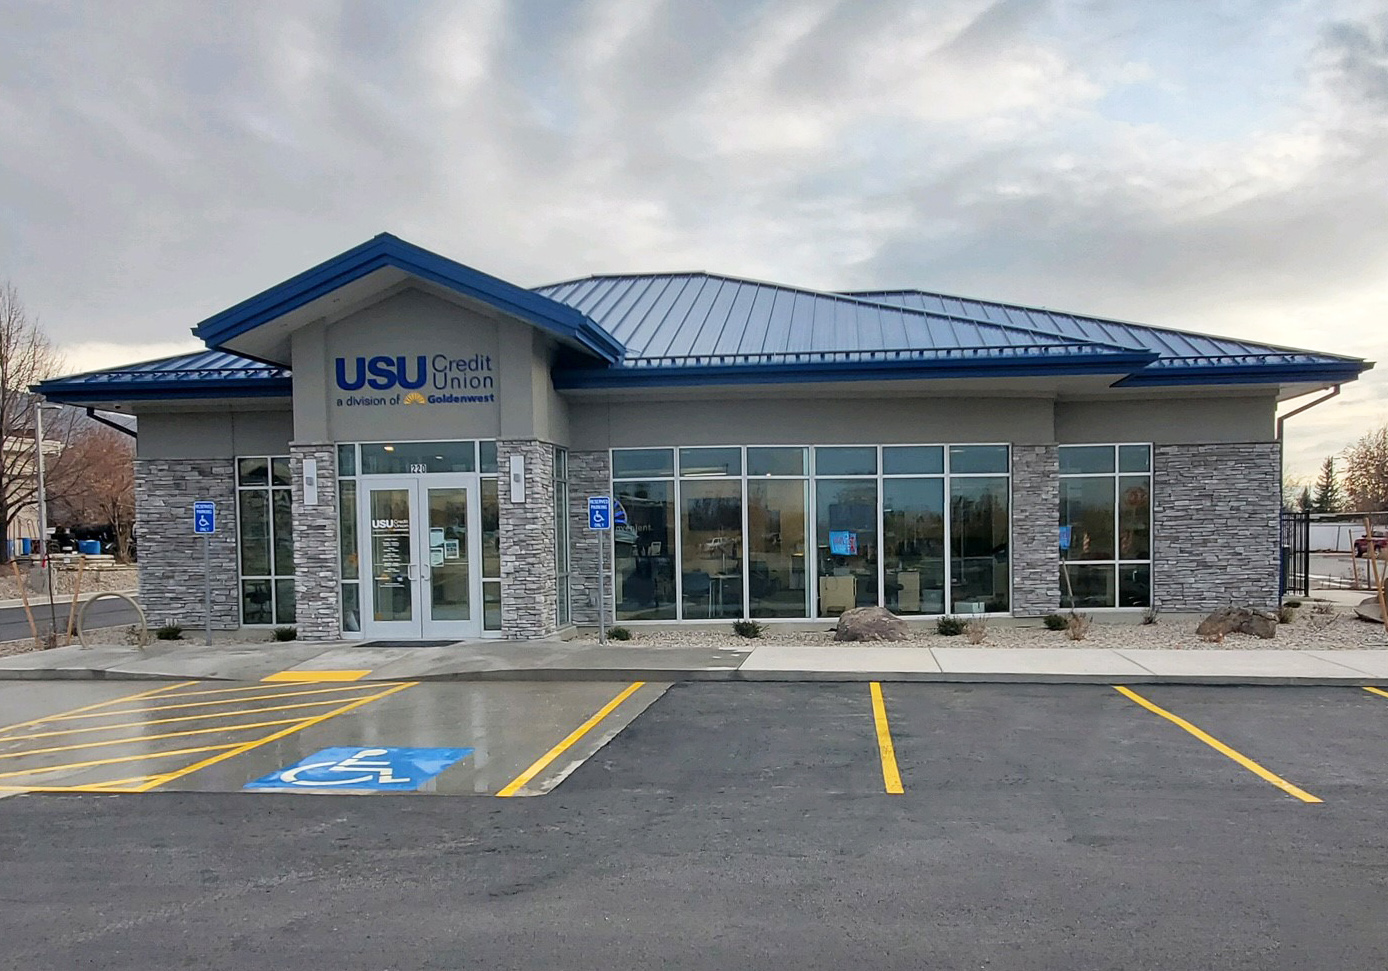 USU Credit Union